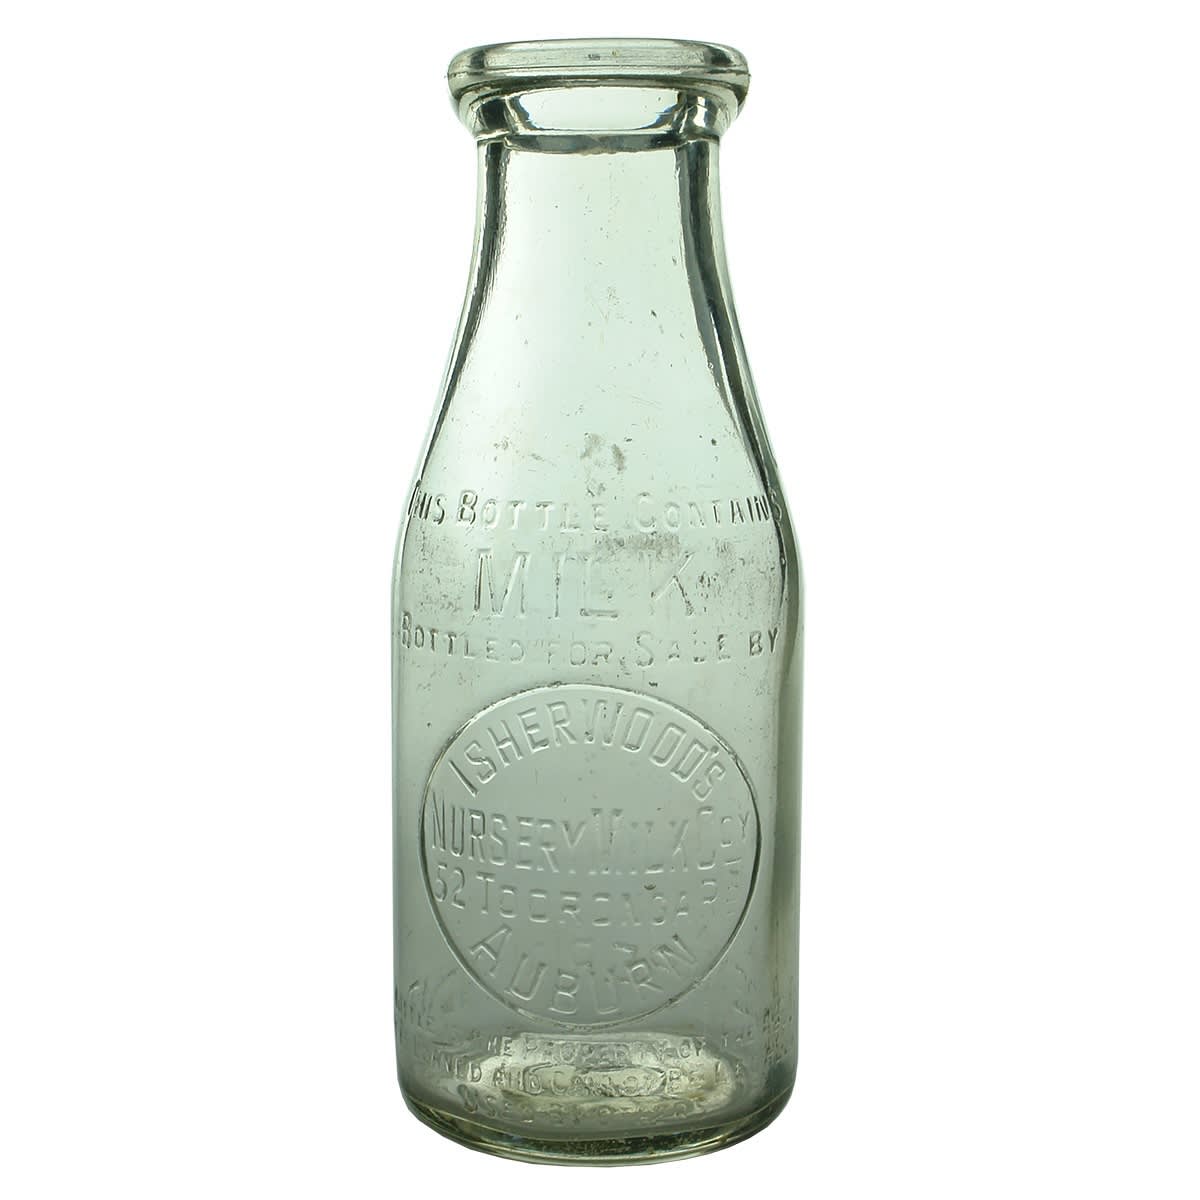 Milk. Isherwood's Nursery Milk Coy, Auburn. Wad Lip. Clear. 1 Pint. (Victoria)